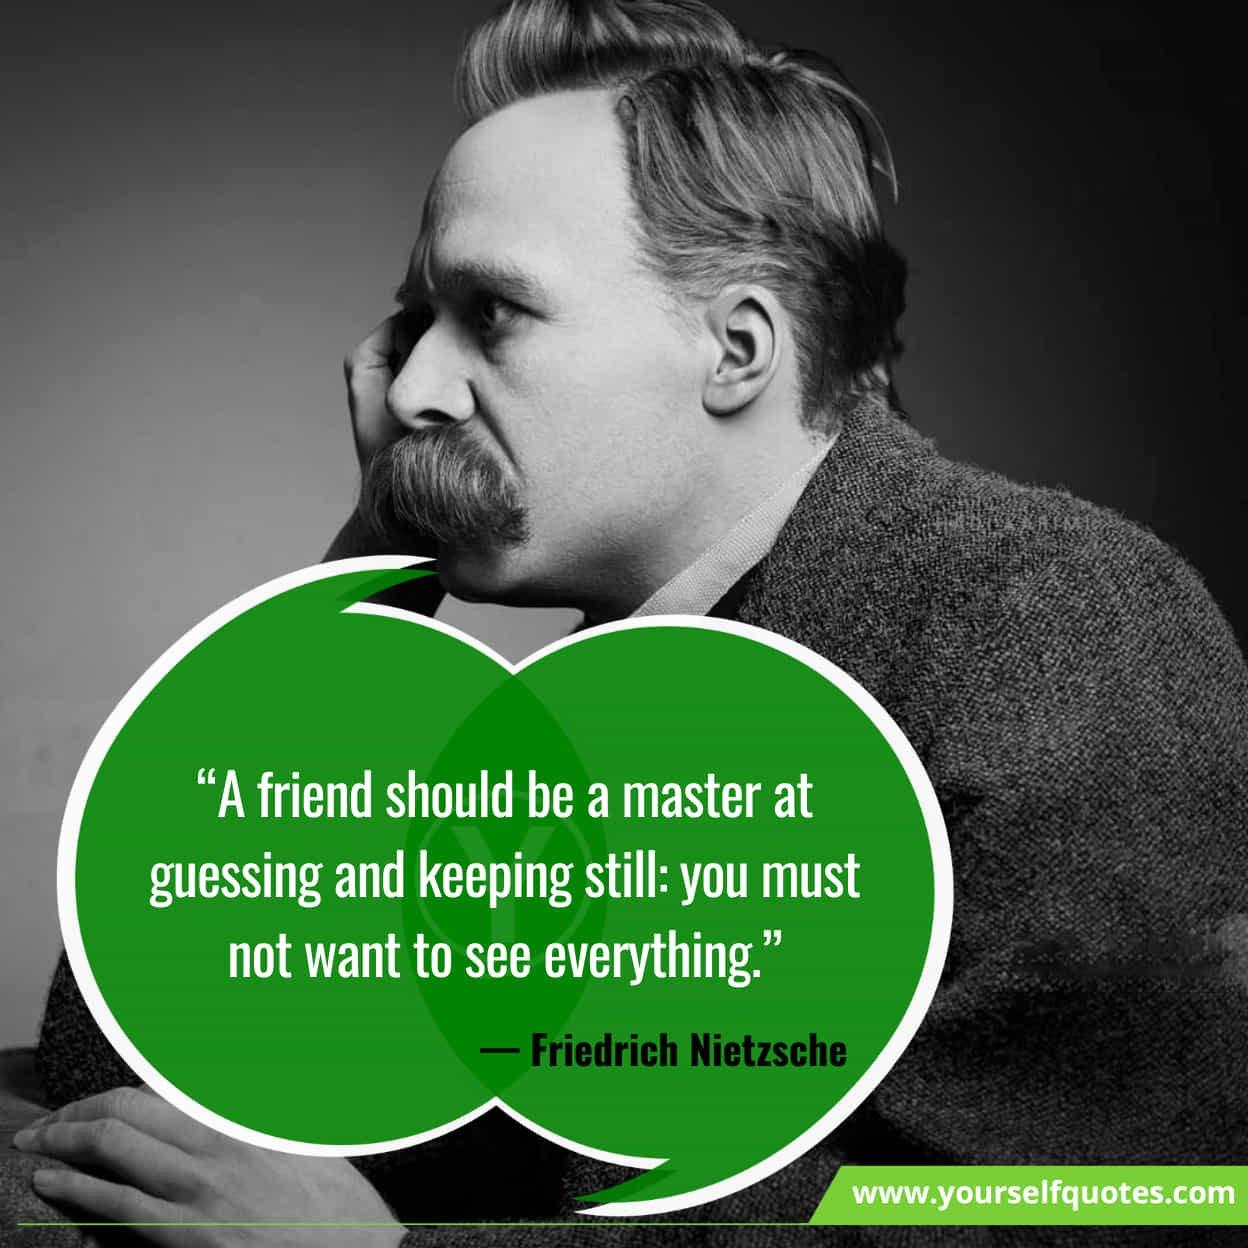 Best Quotes From Friedrich Nietzsche For Success